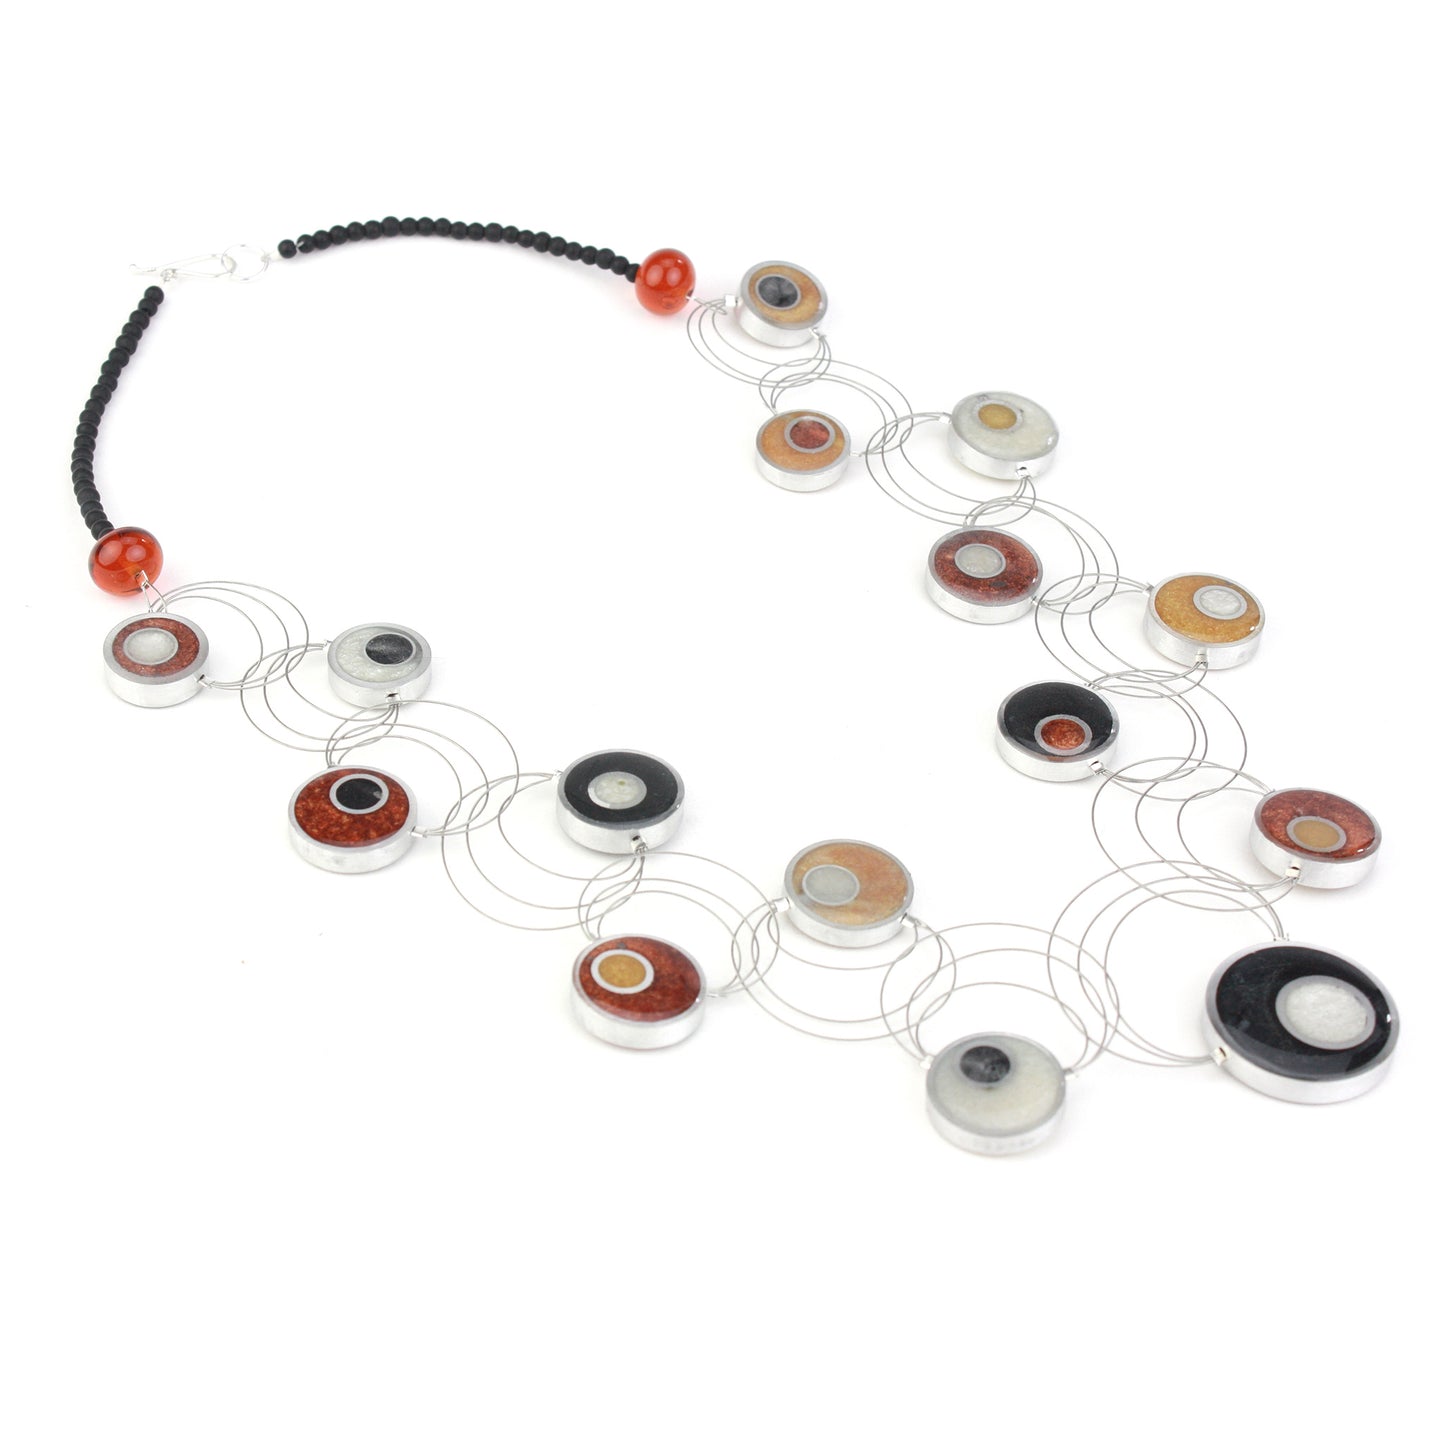 Resinique interlocking circles necklace - Black, white, copper and gold